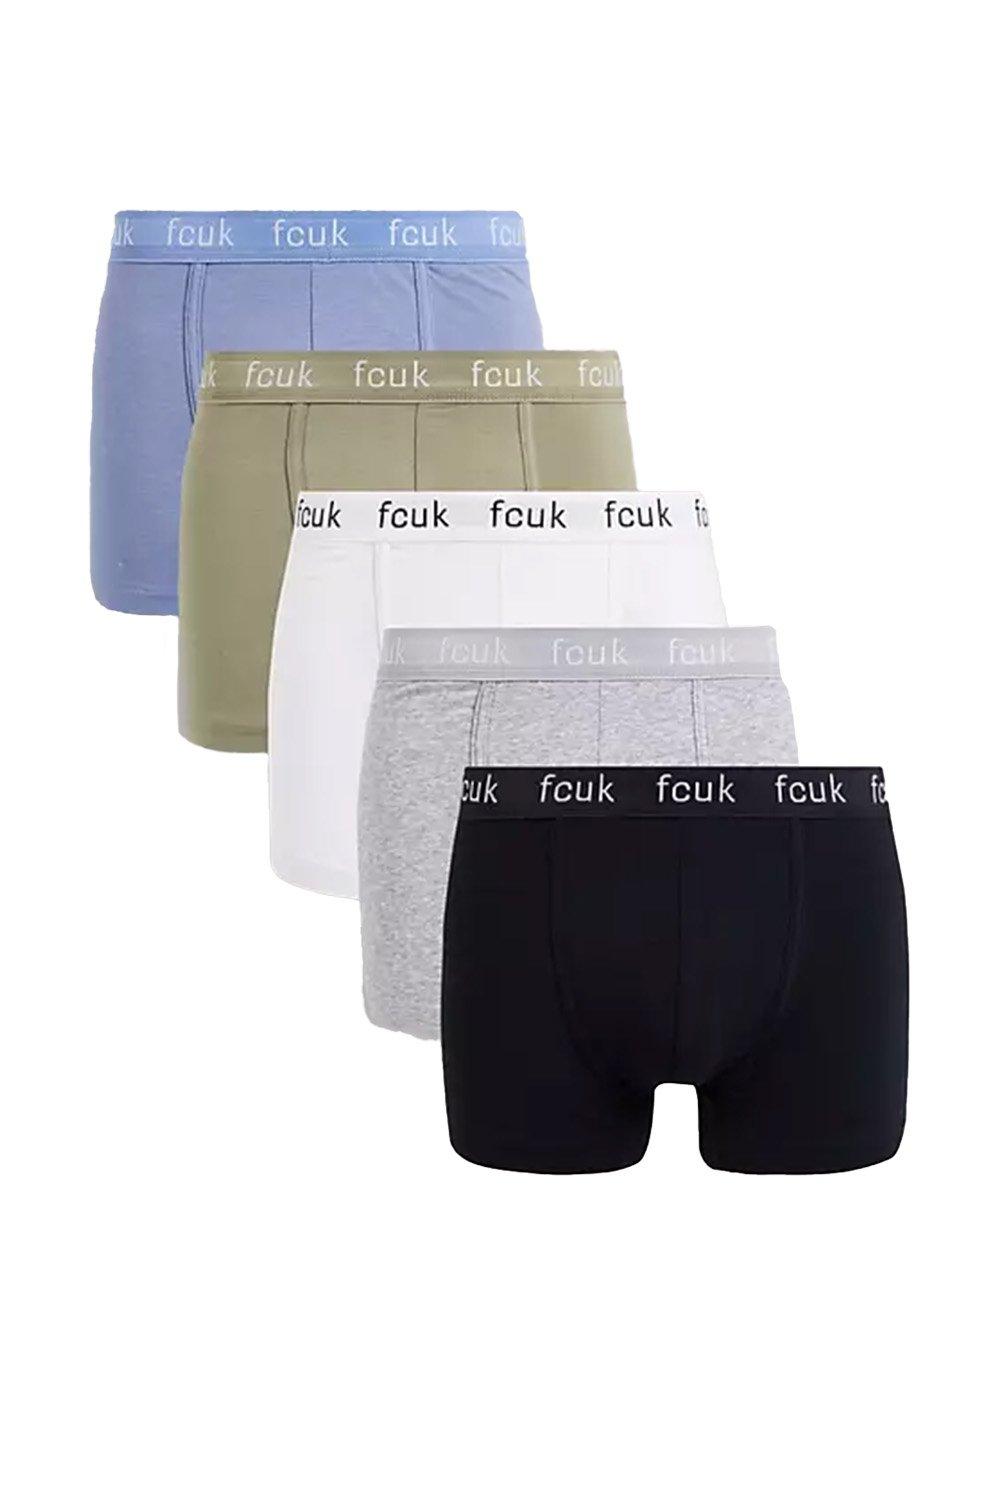 NAUTICA Boxer Briefs Mens Underwear 3 Pack MICRO Poly Blend S M L